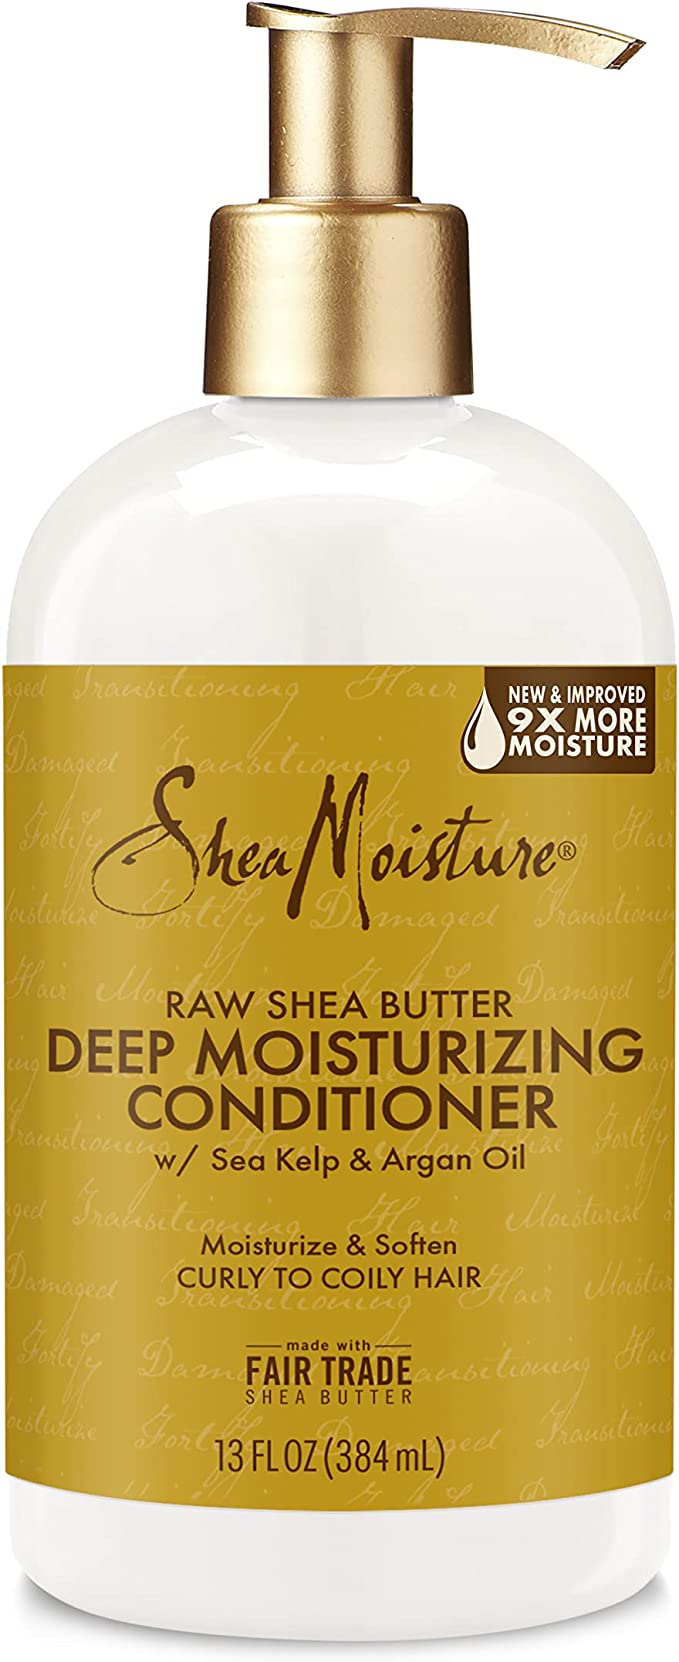 Shea Moisture Deep Moisturizing Conditioner 384 ml